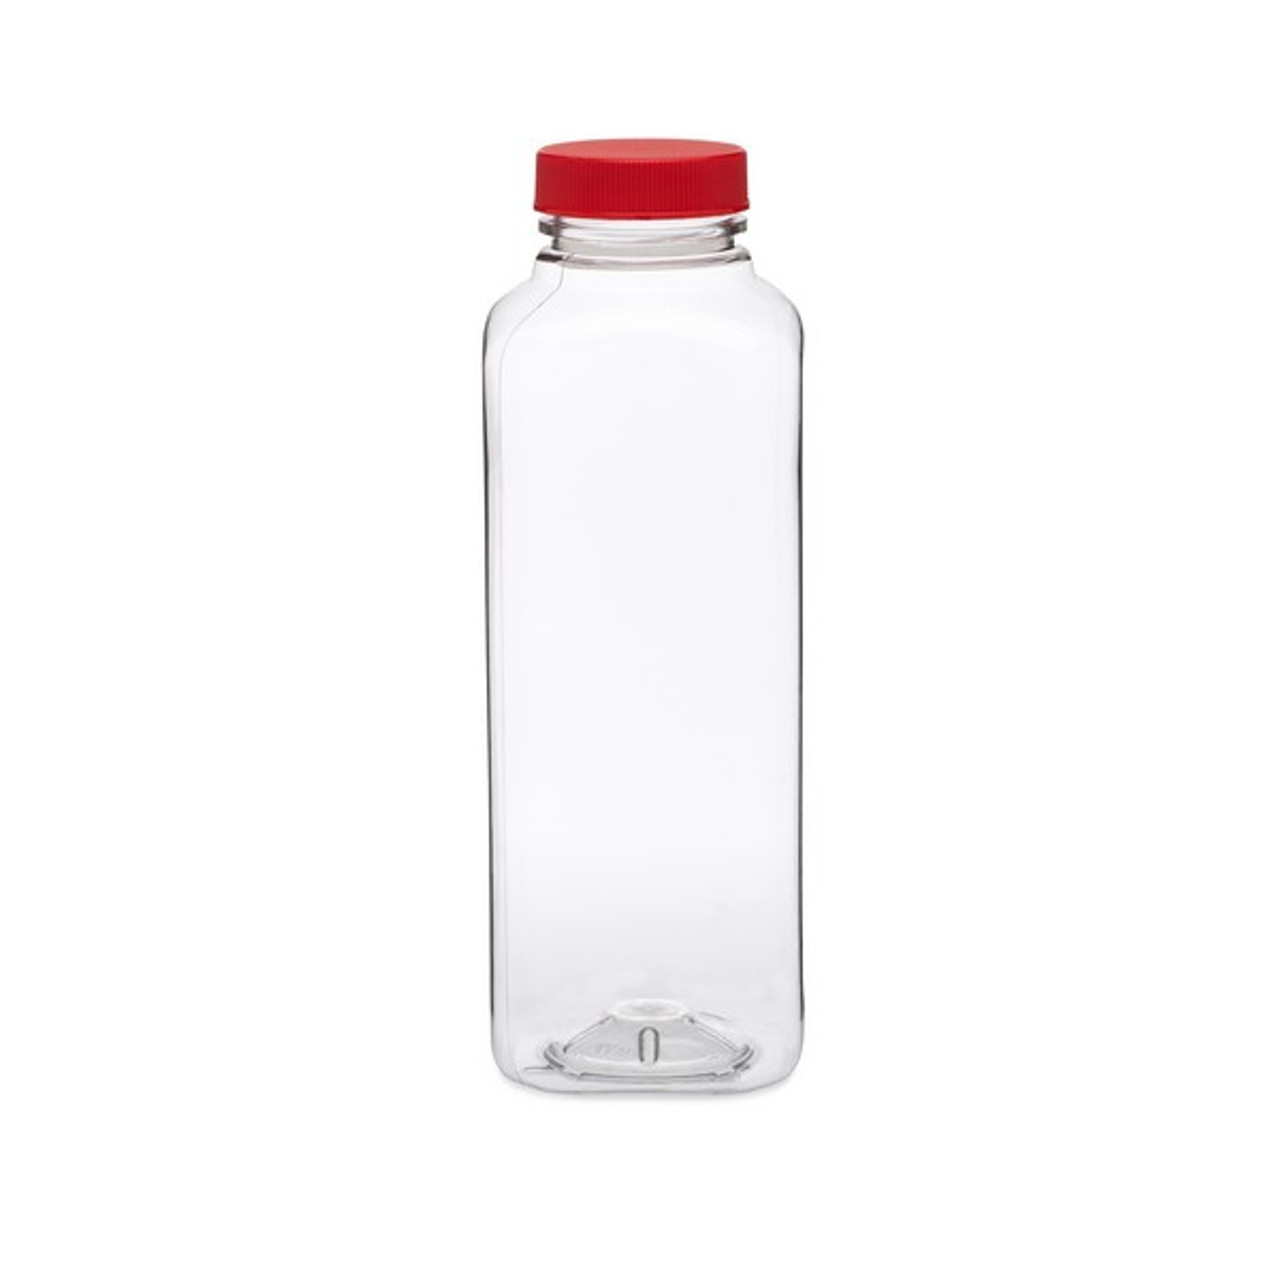 16 oz. Square PET Clear Juice Bottle with Lid